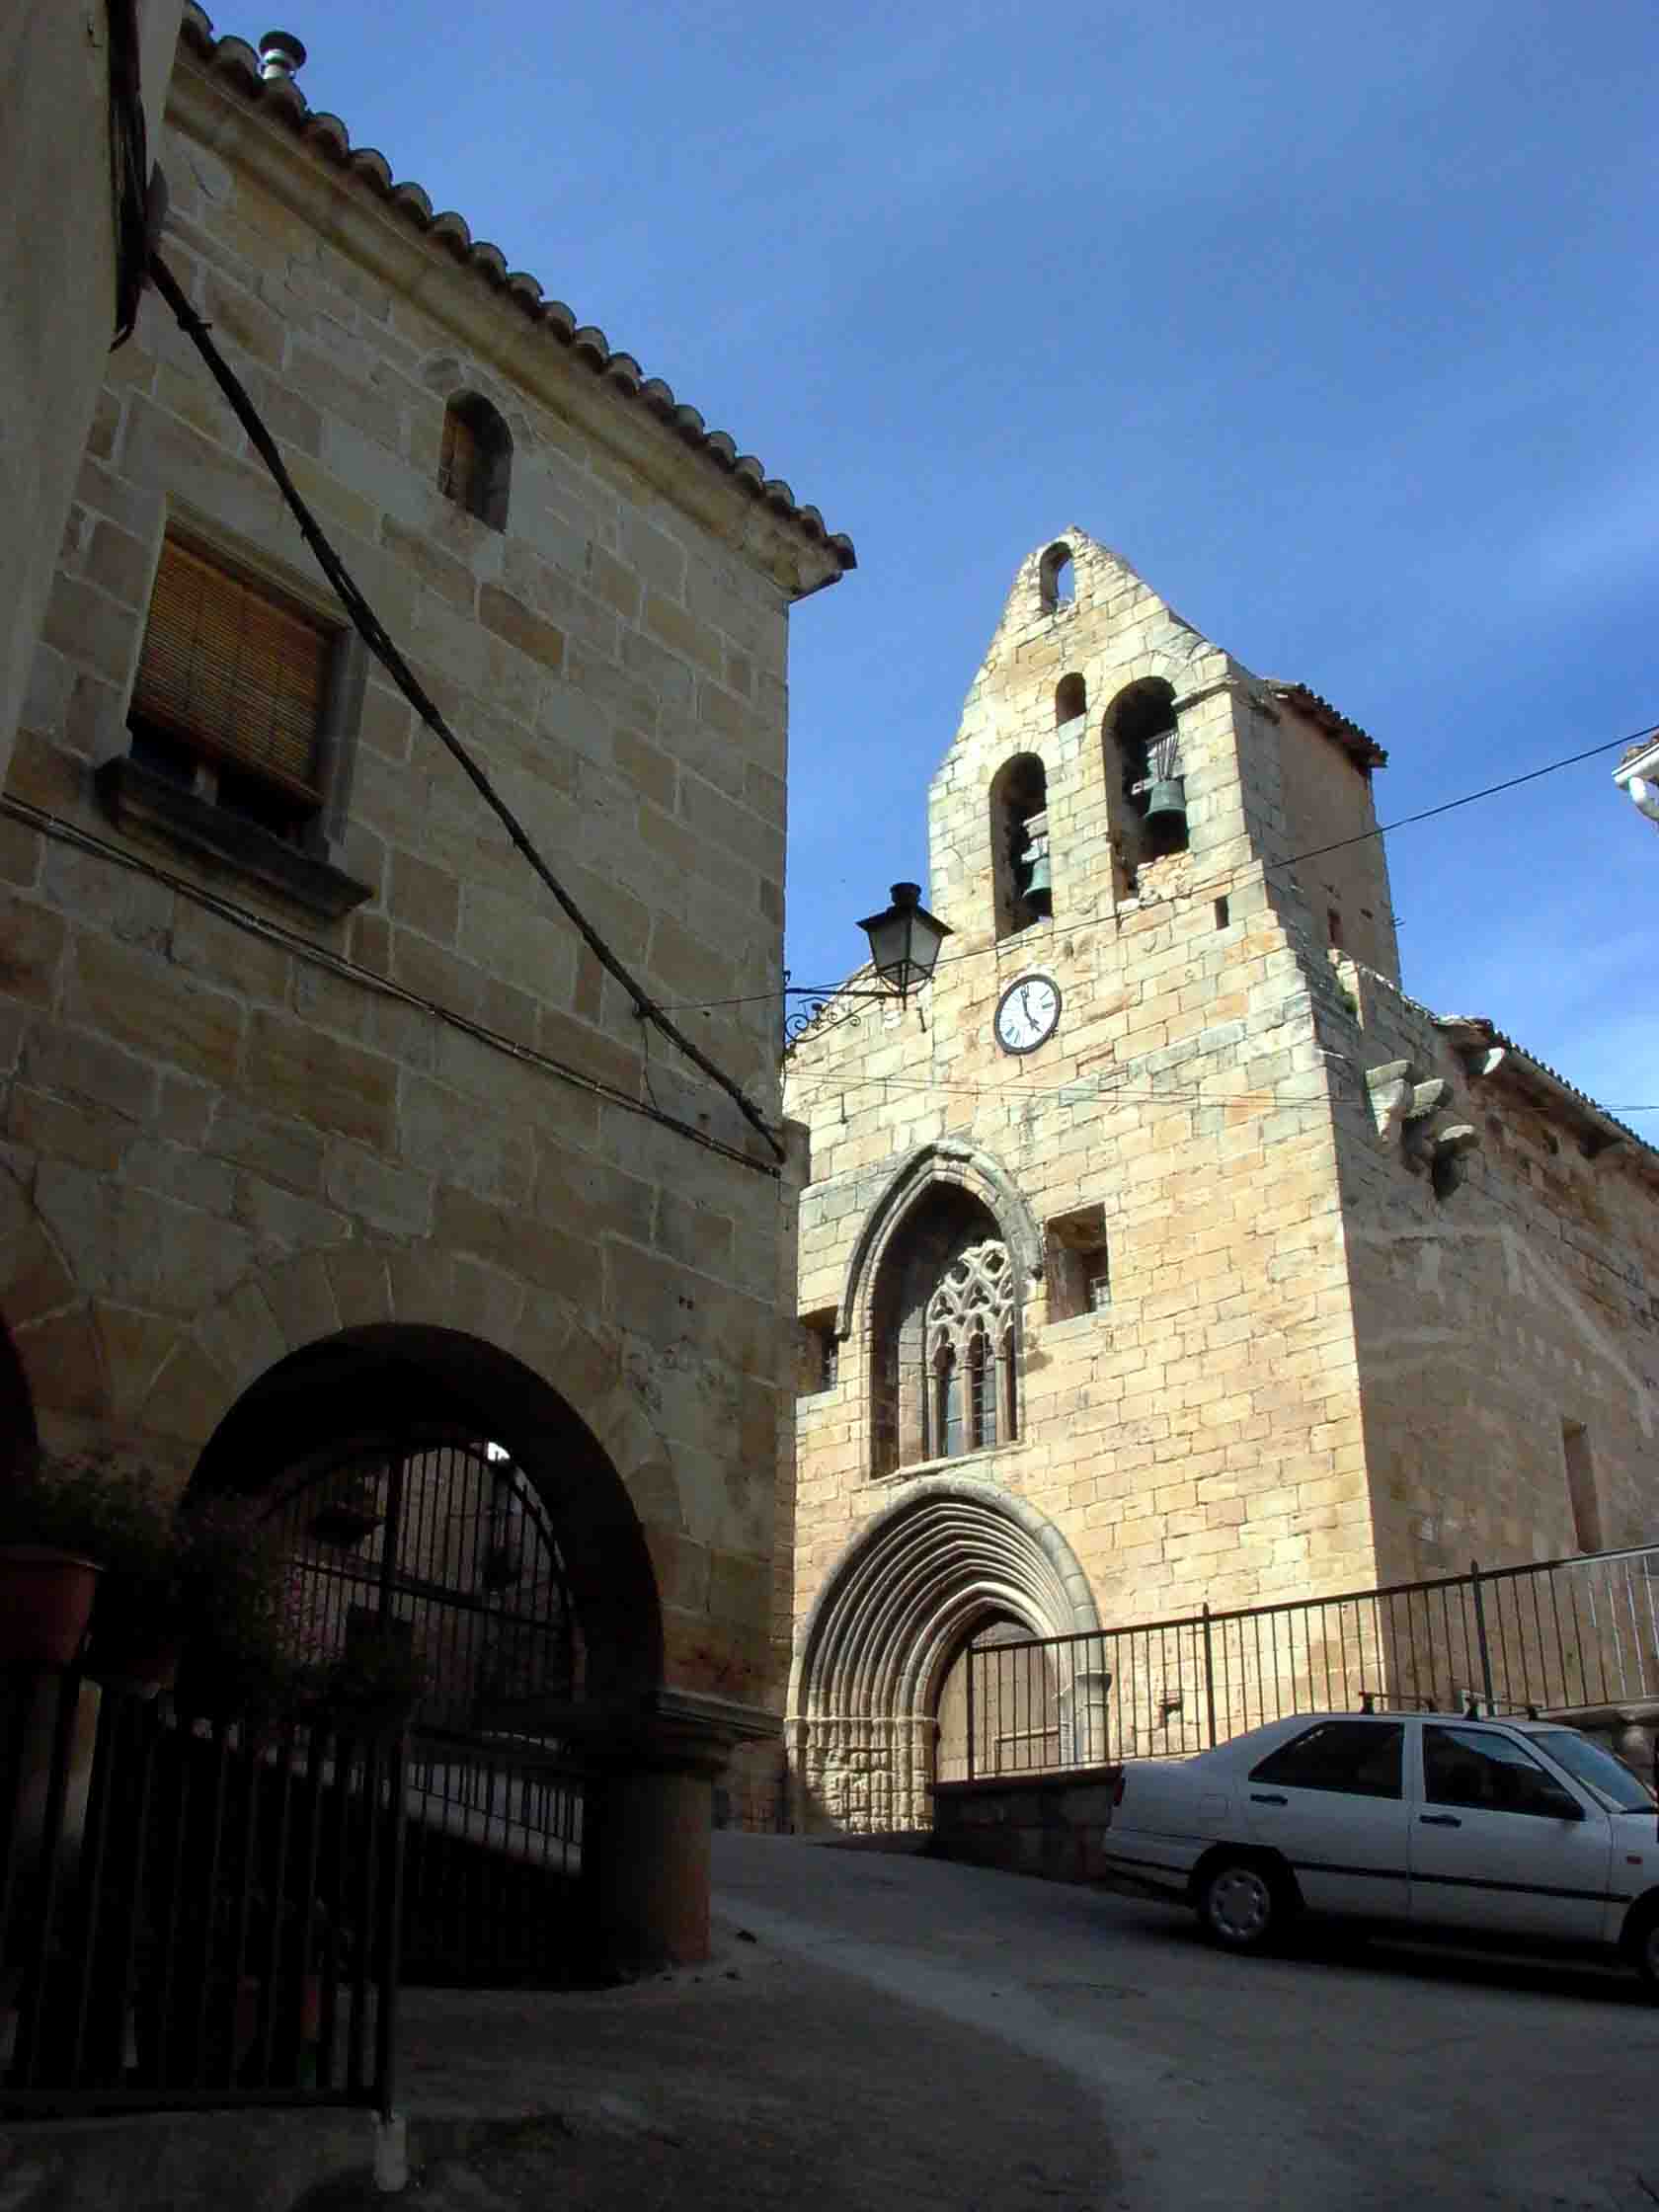 Foto de Lledo (Teruel), España